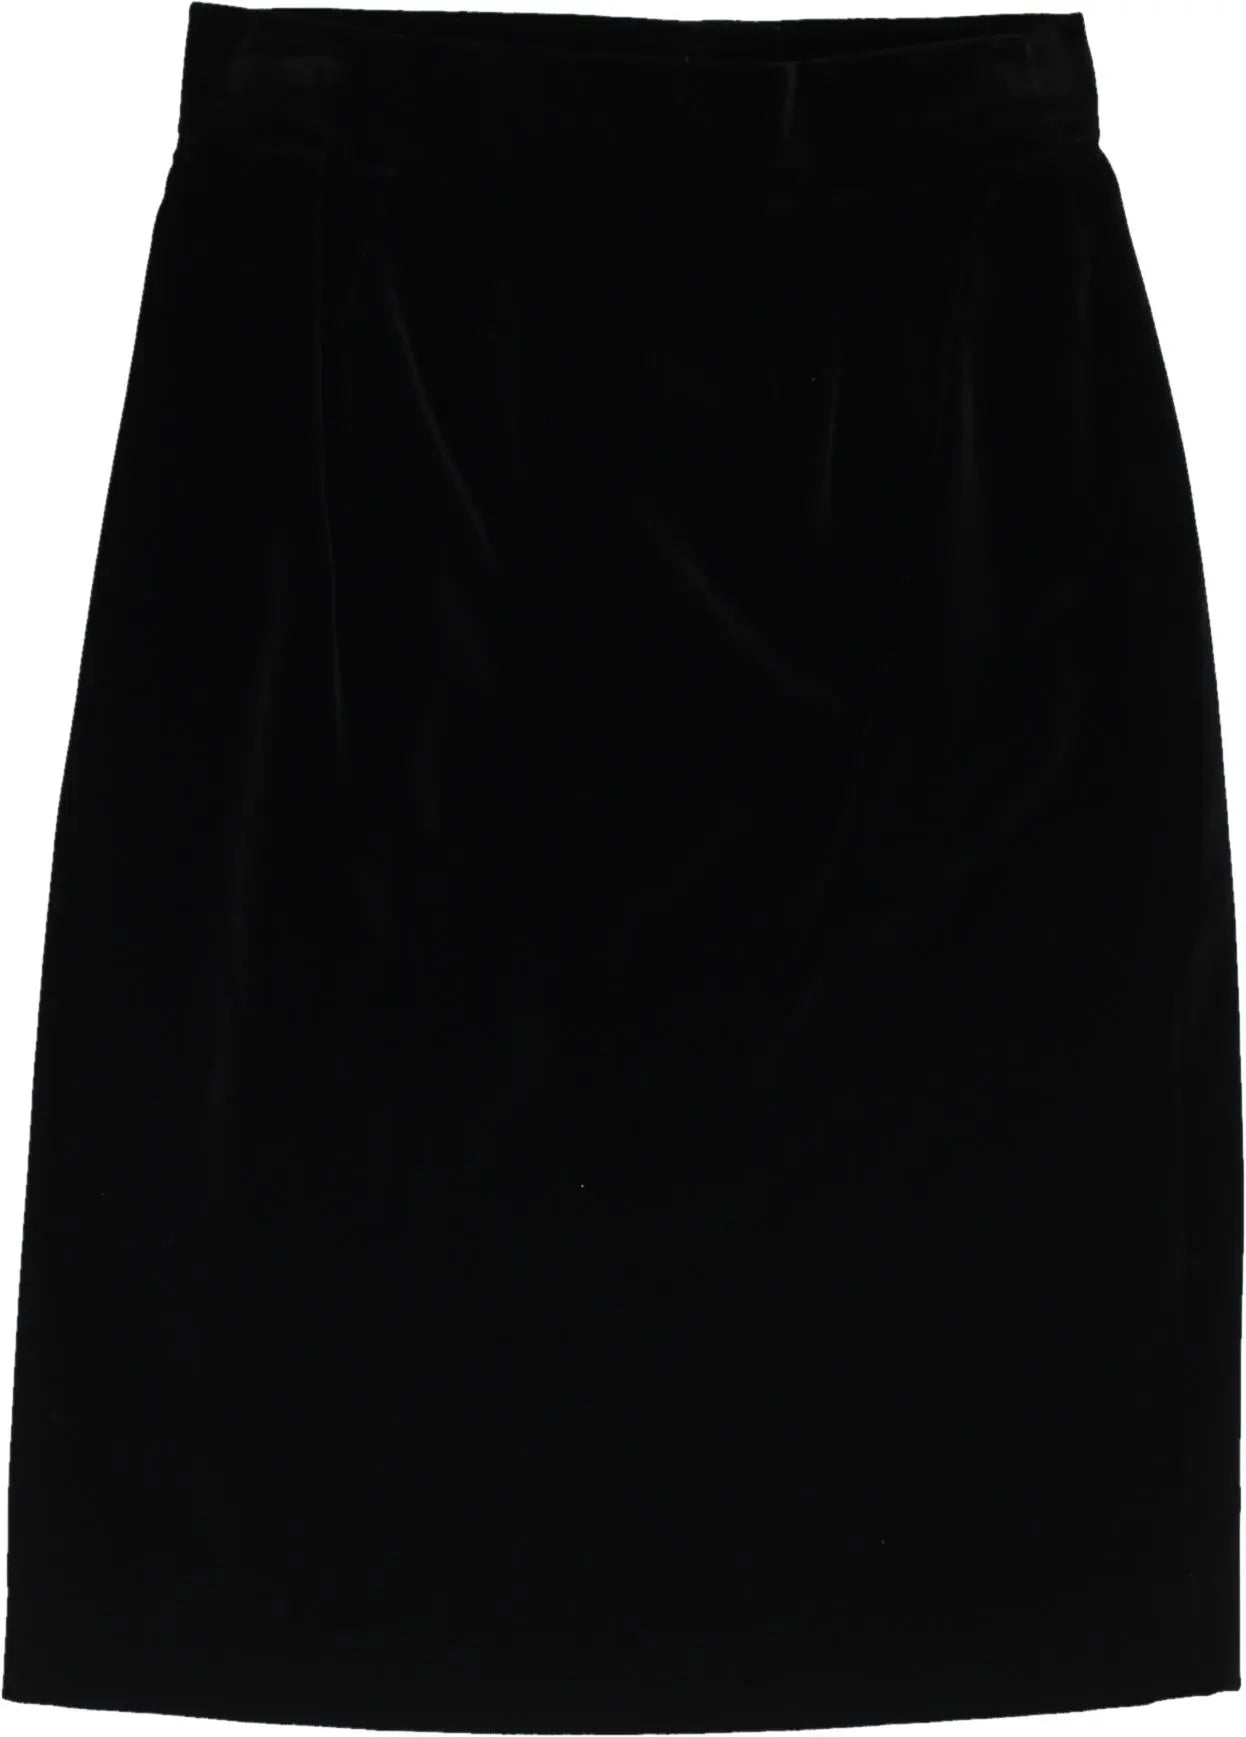 Widudress - 80s Velvet Skirt- ThriftTale.com - Vintage and second handclothing